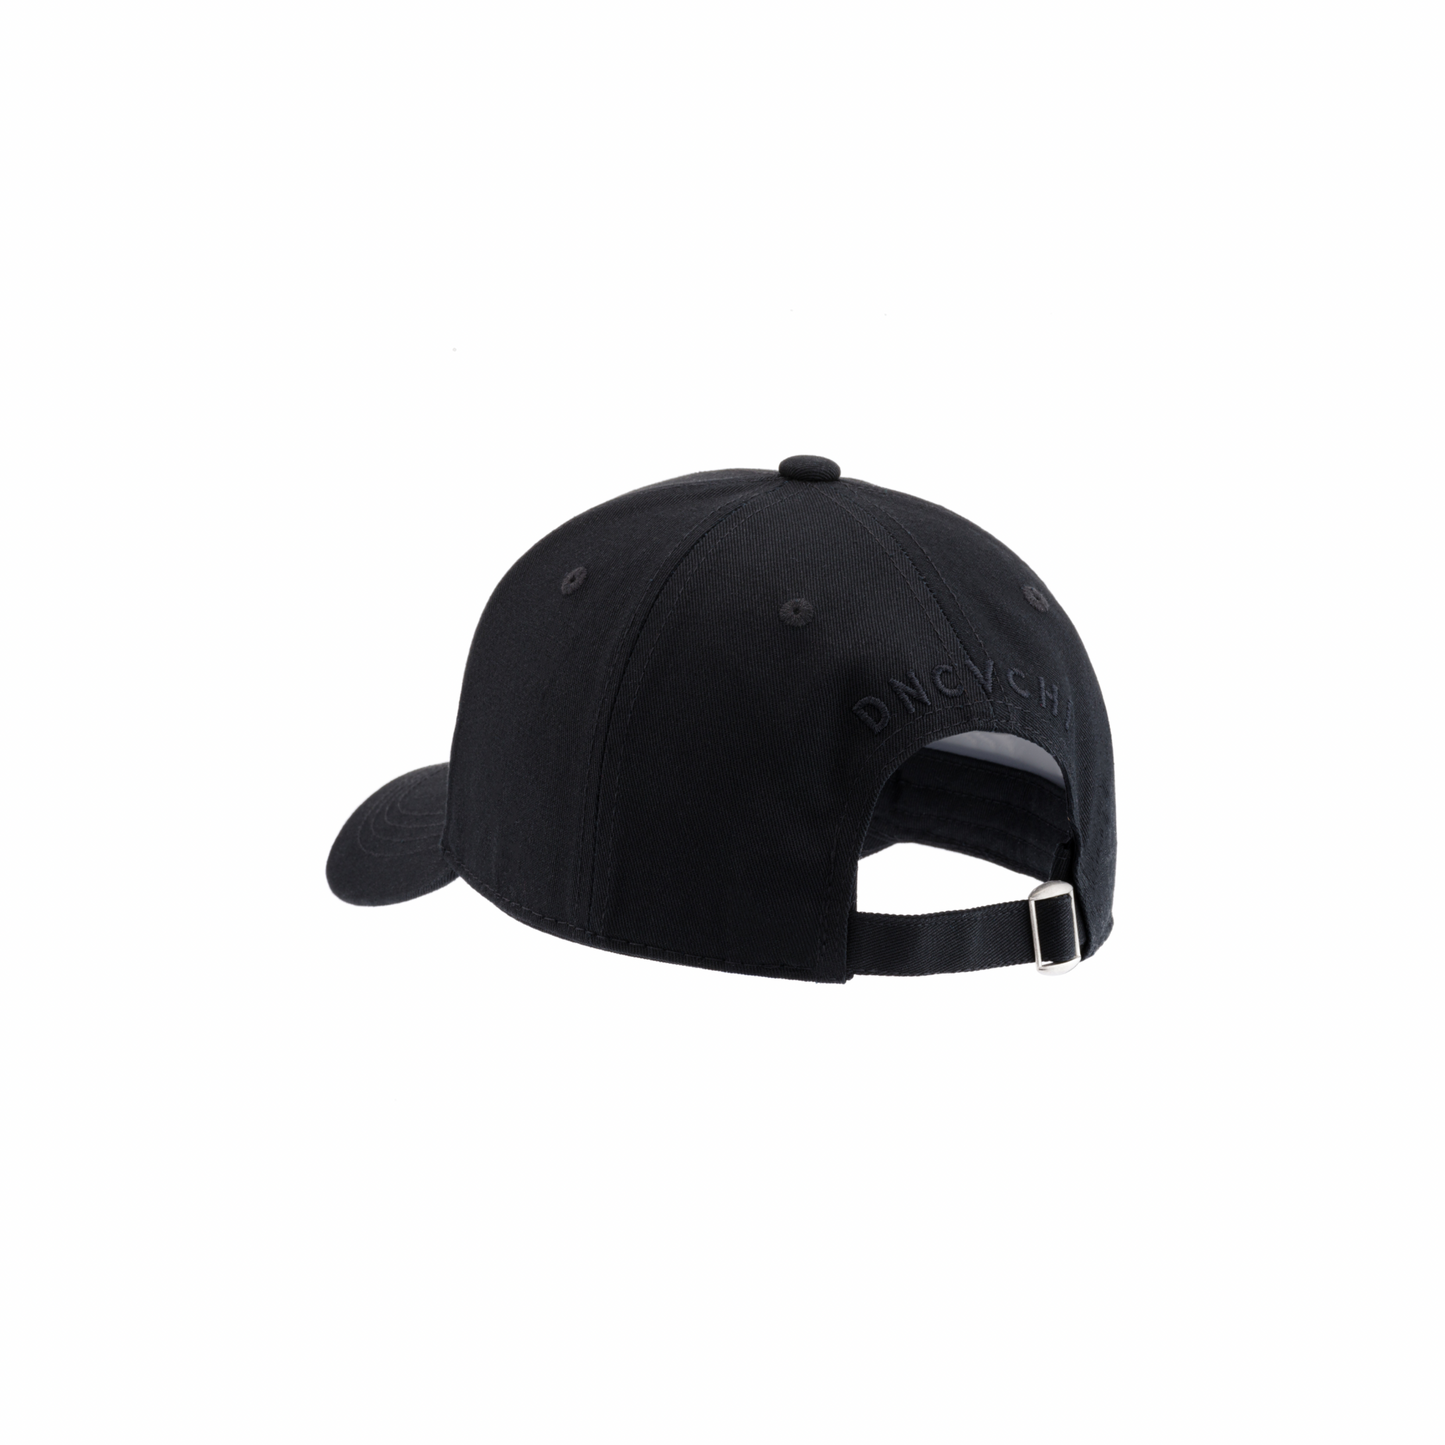 DNCVCHI - BLACK/BLACK - BASEBALL CAP